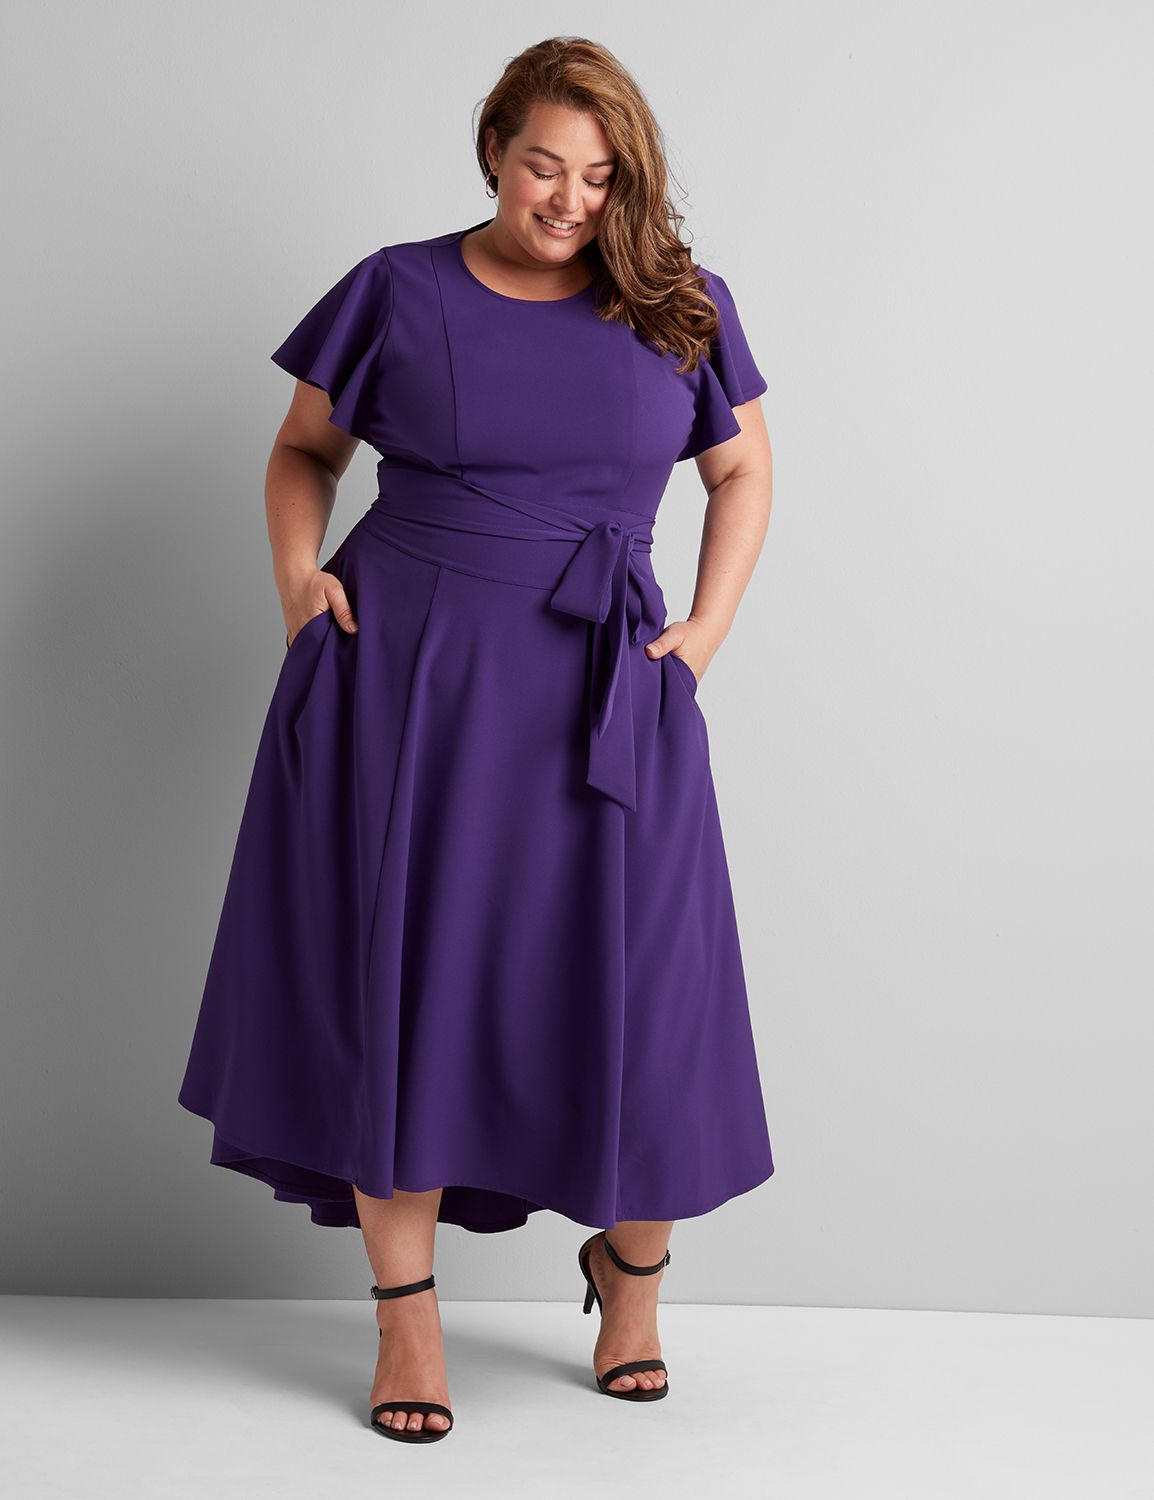 lane bryant purple dress